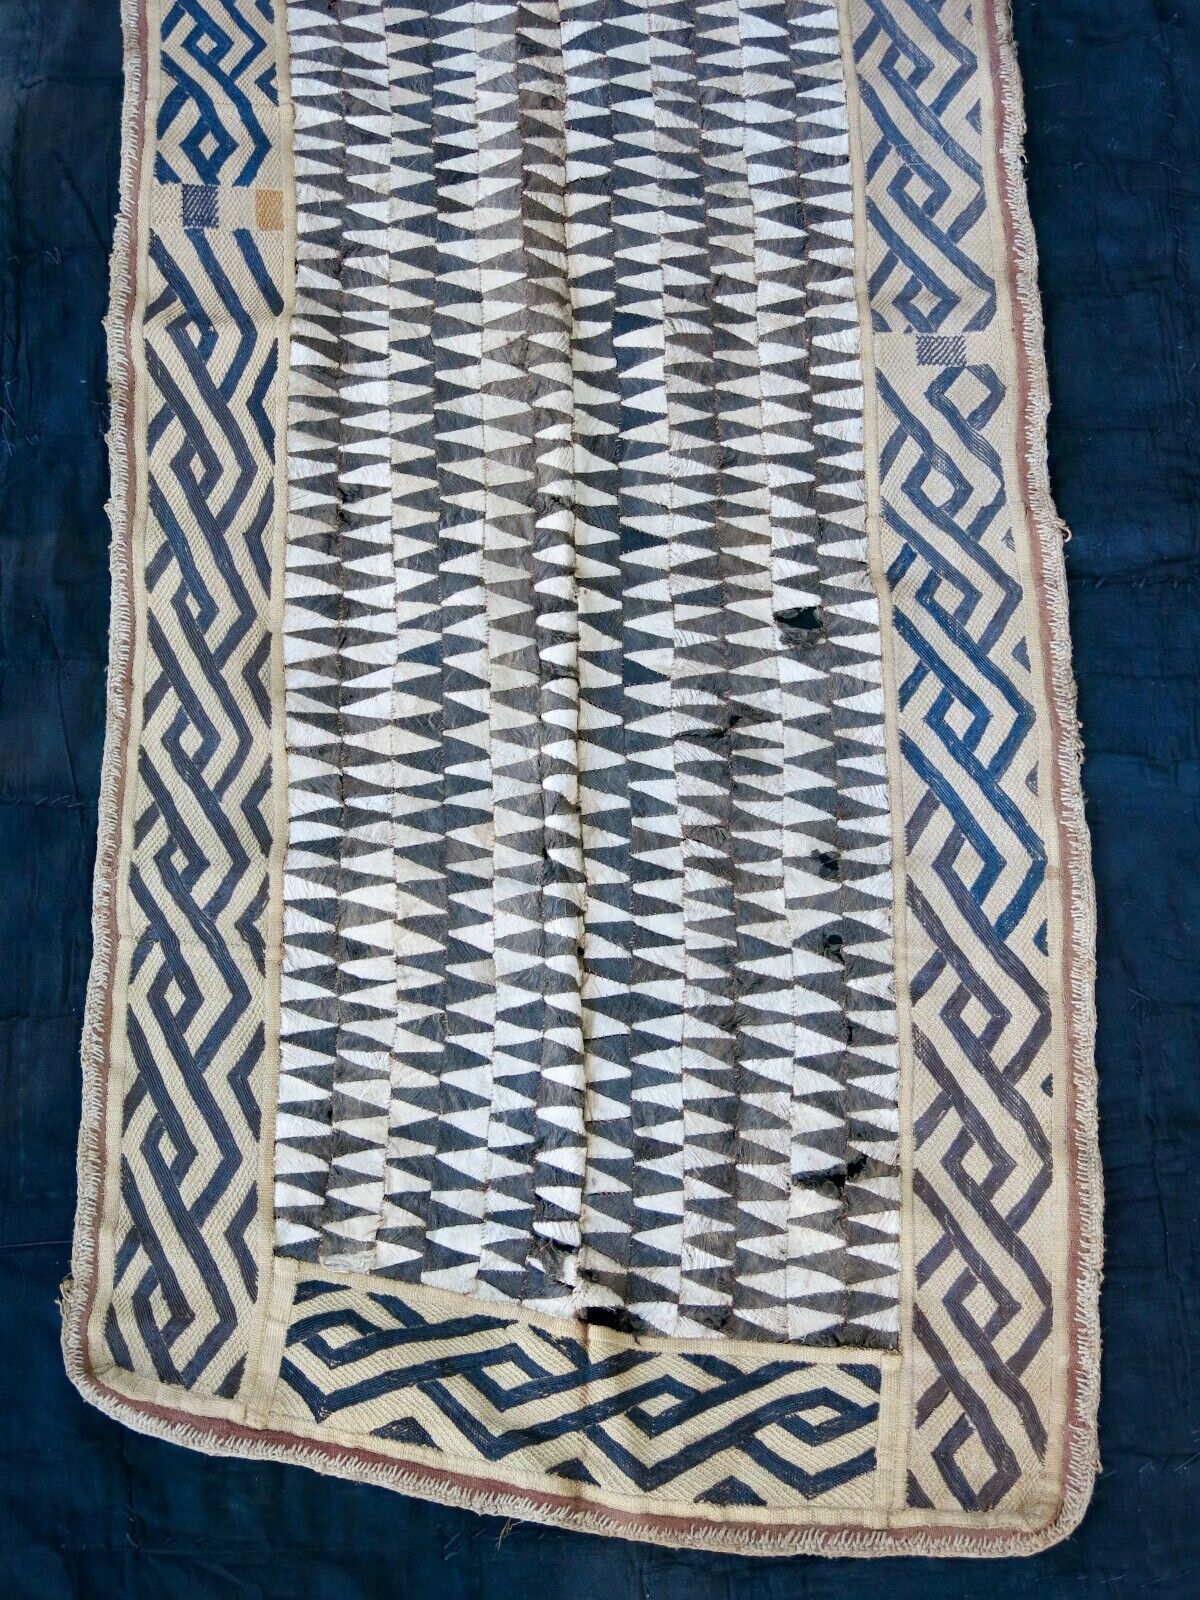 Fabulous Old Kuba Bark Cloth Textile AFRICAN Tribal Man's Royal Overskirt